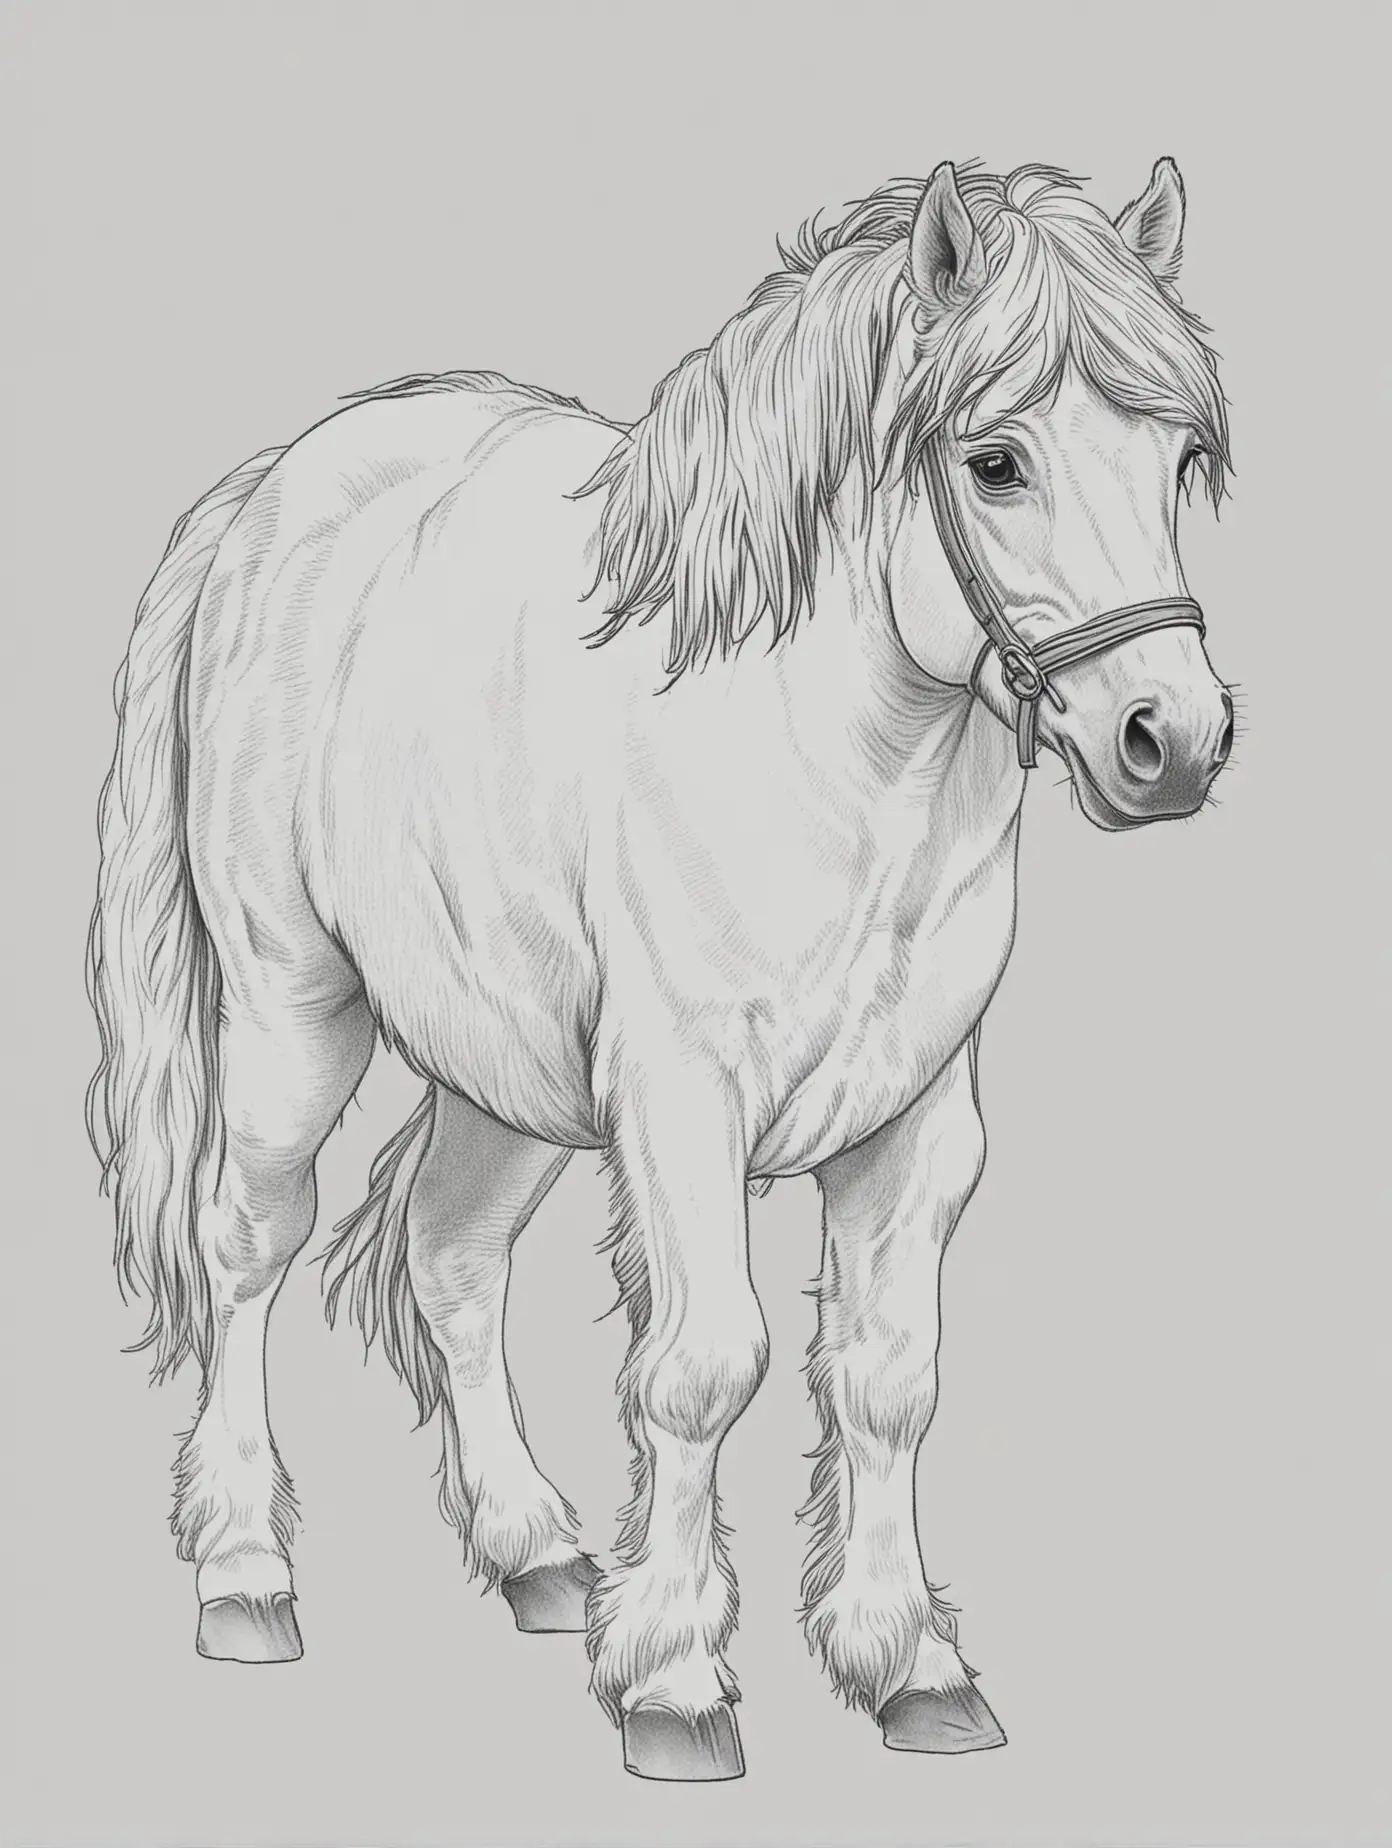 Adorable Shetland Pony Outline for Childrens Coloring Book